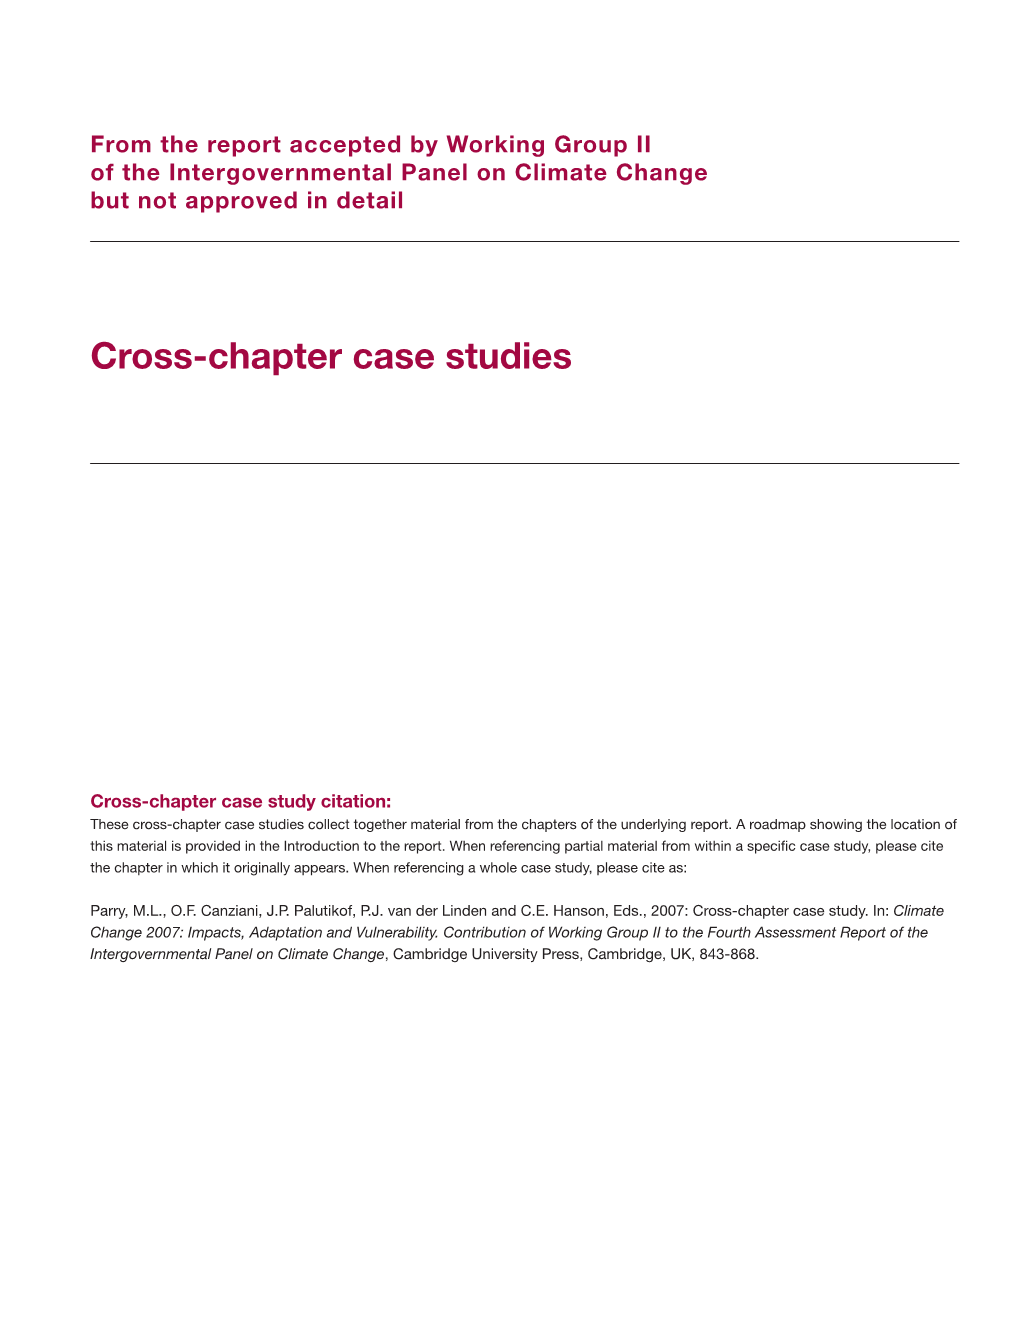 Cross-Chapter Case Studies